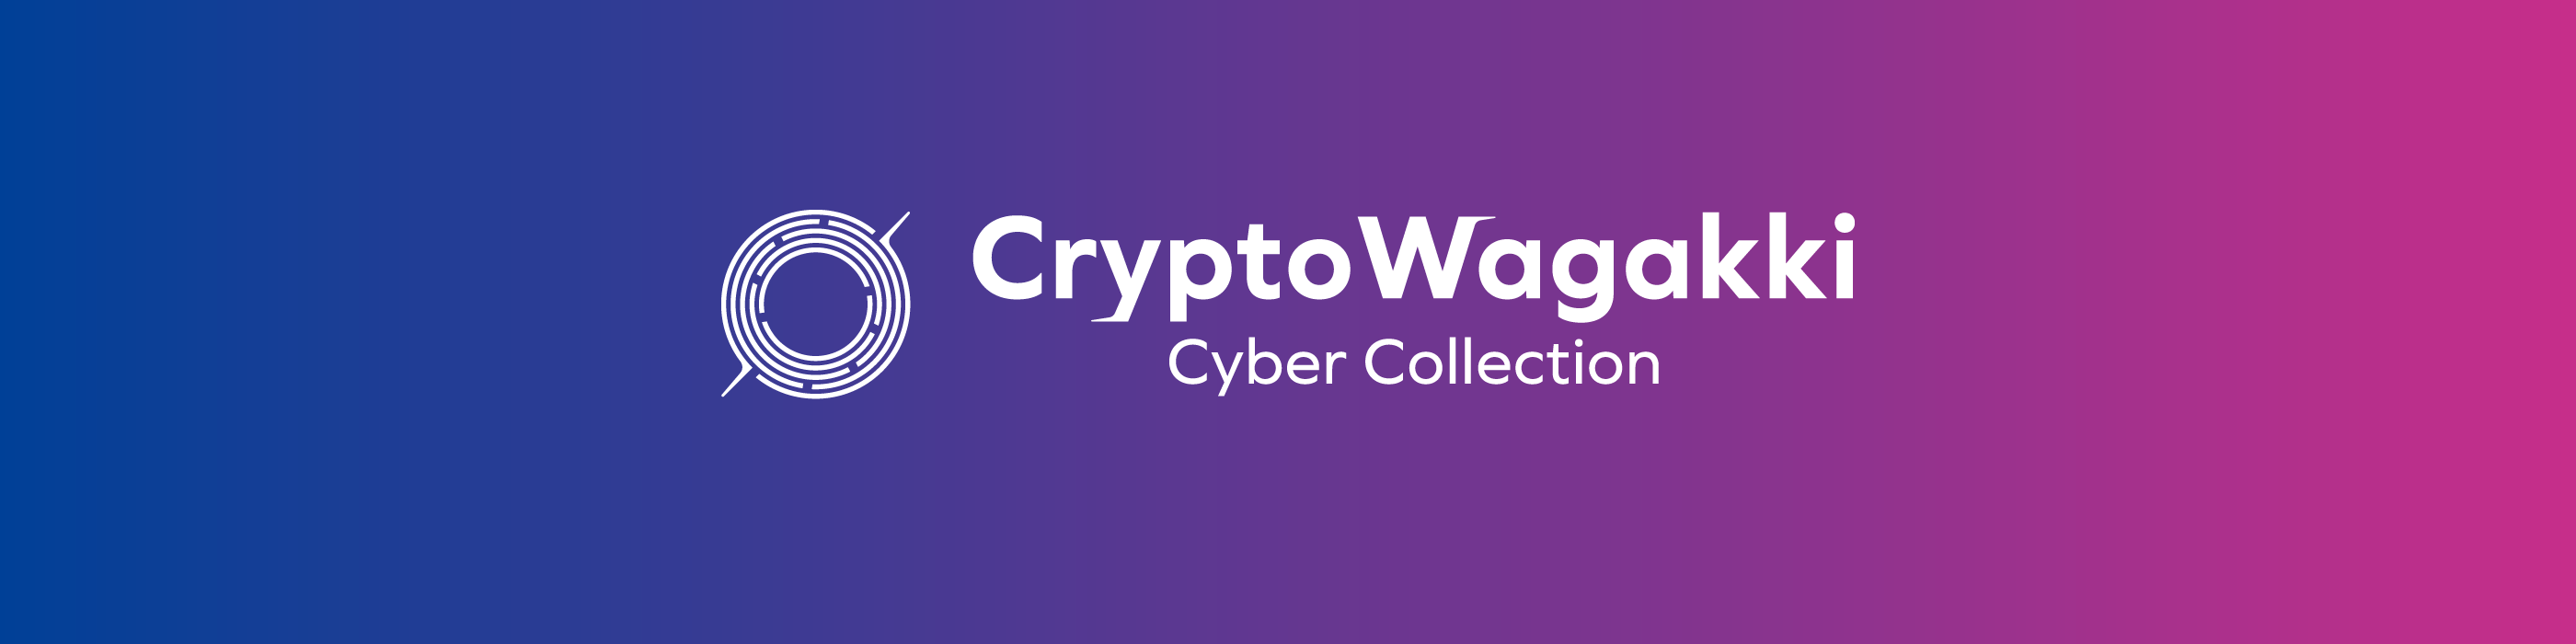 CryptoWagakki Cyber Collection